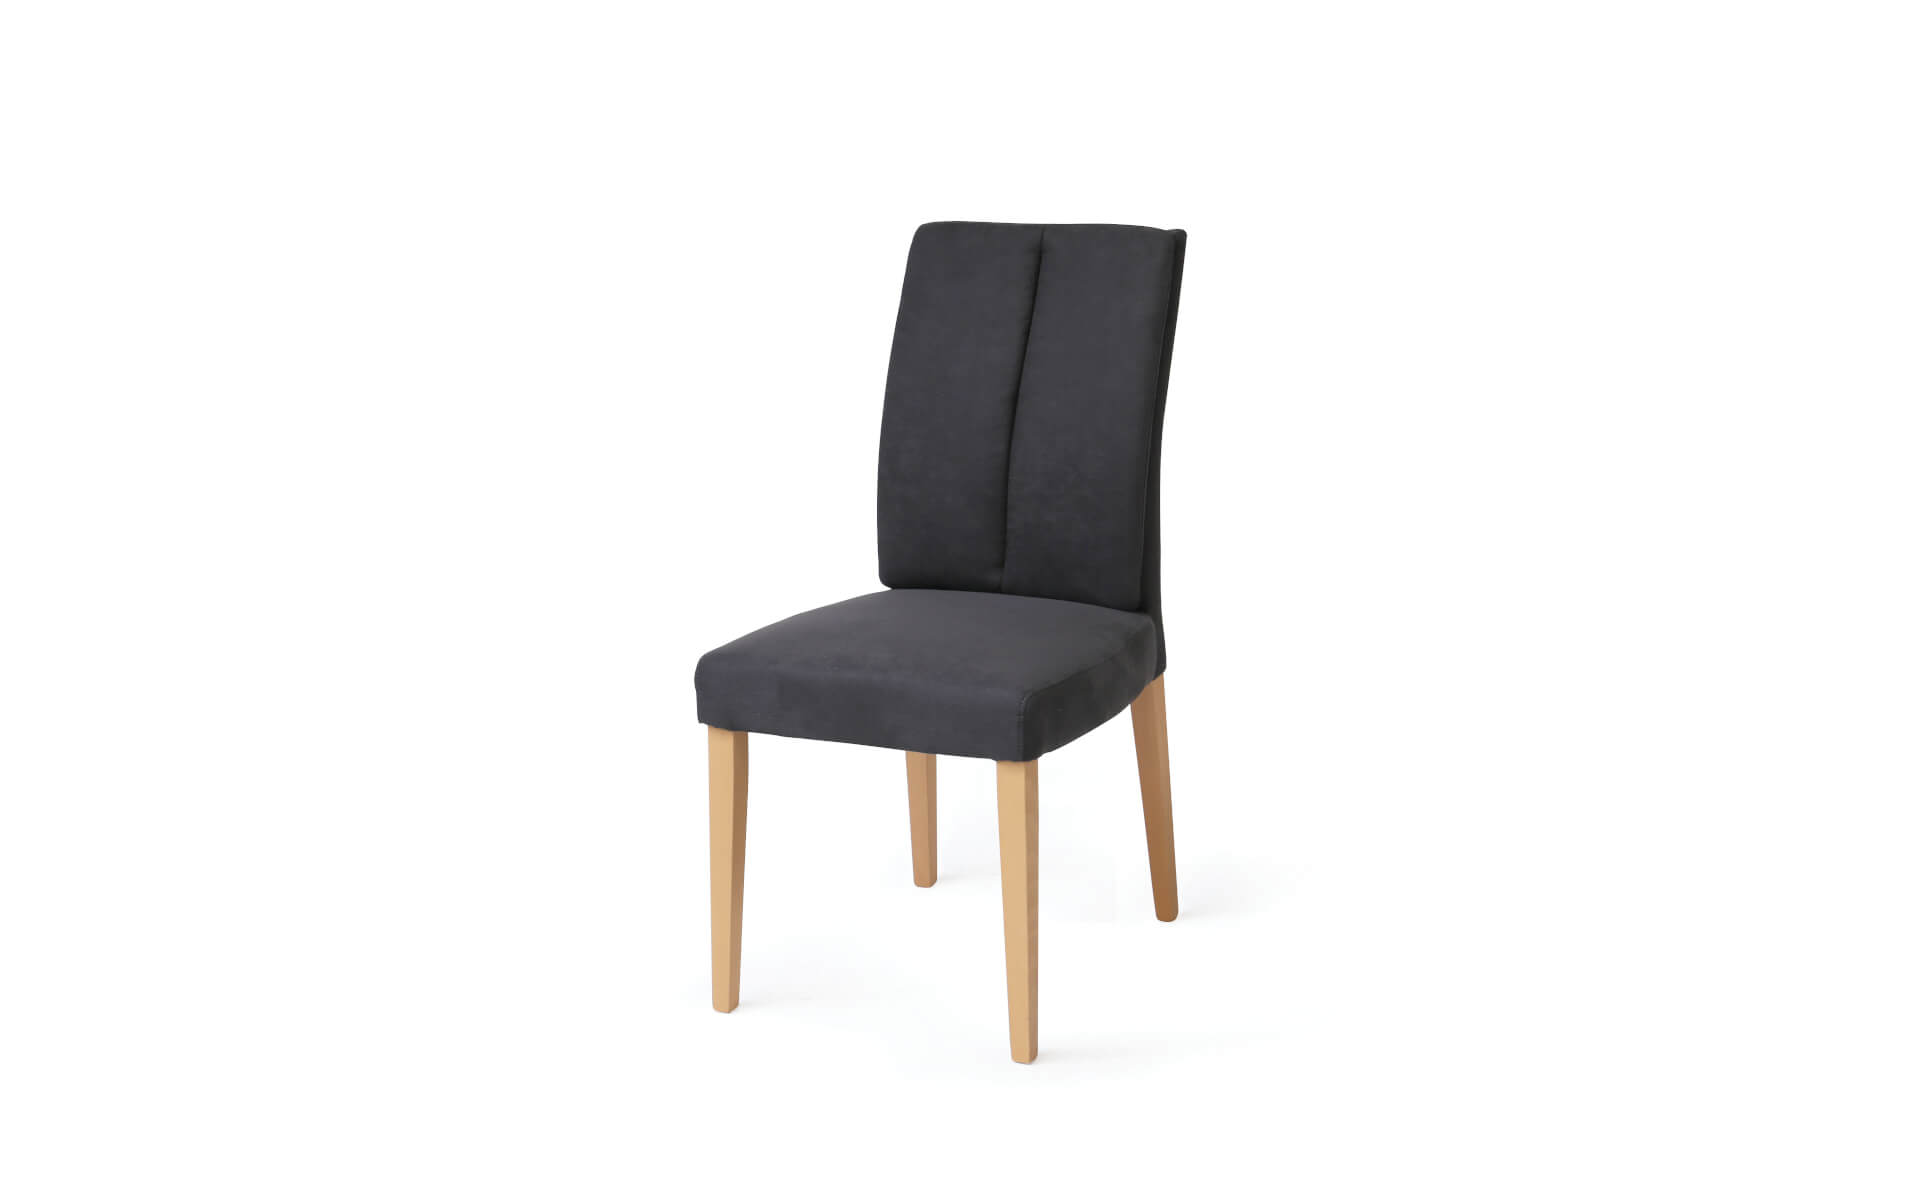 Modell Flynn 7 4-Fuß Stuhl von Standard Furniture